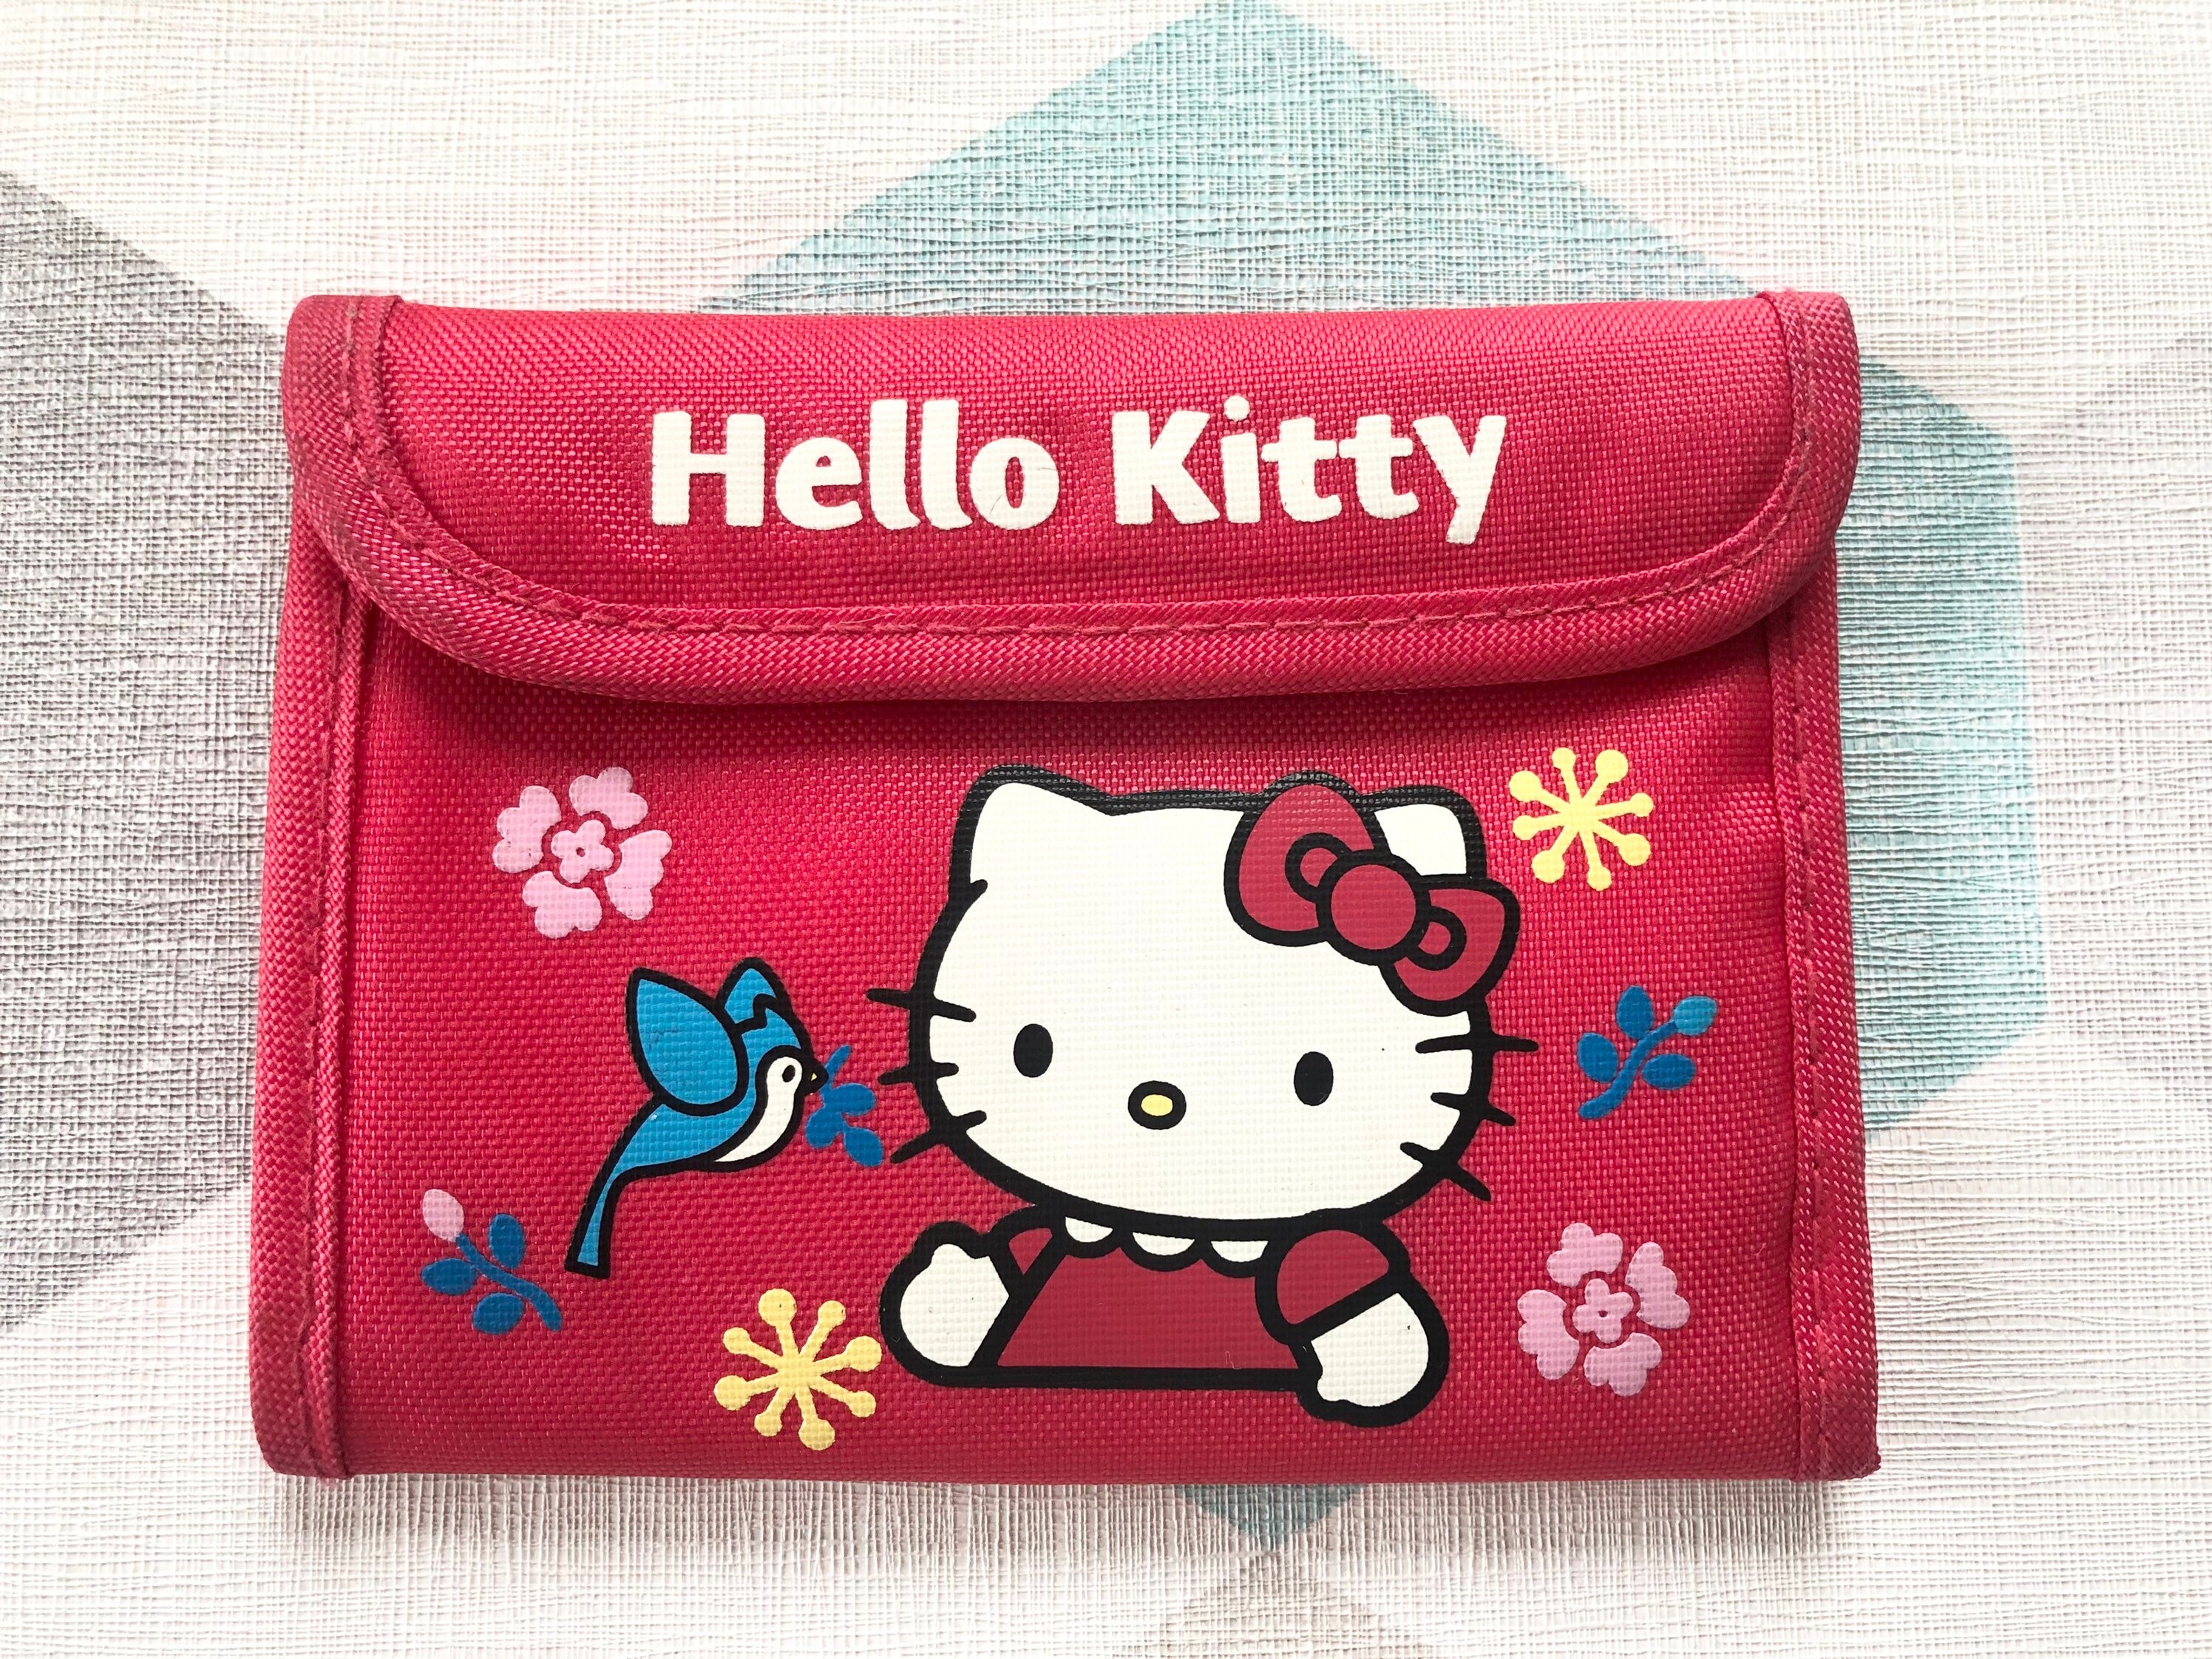 Vintage 2001 Sanrio Hello Kitty Pink Pencil Bag